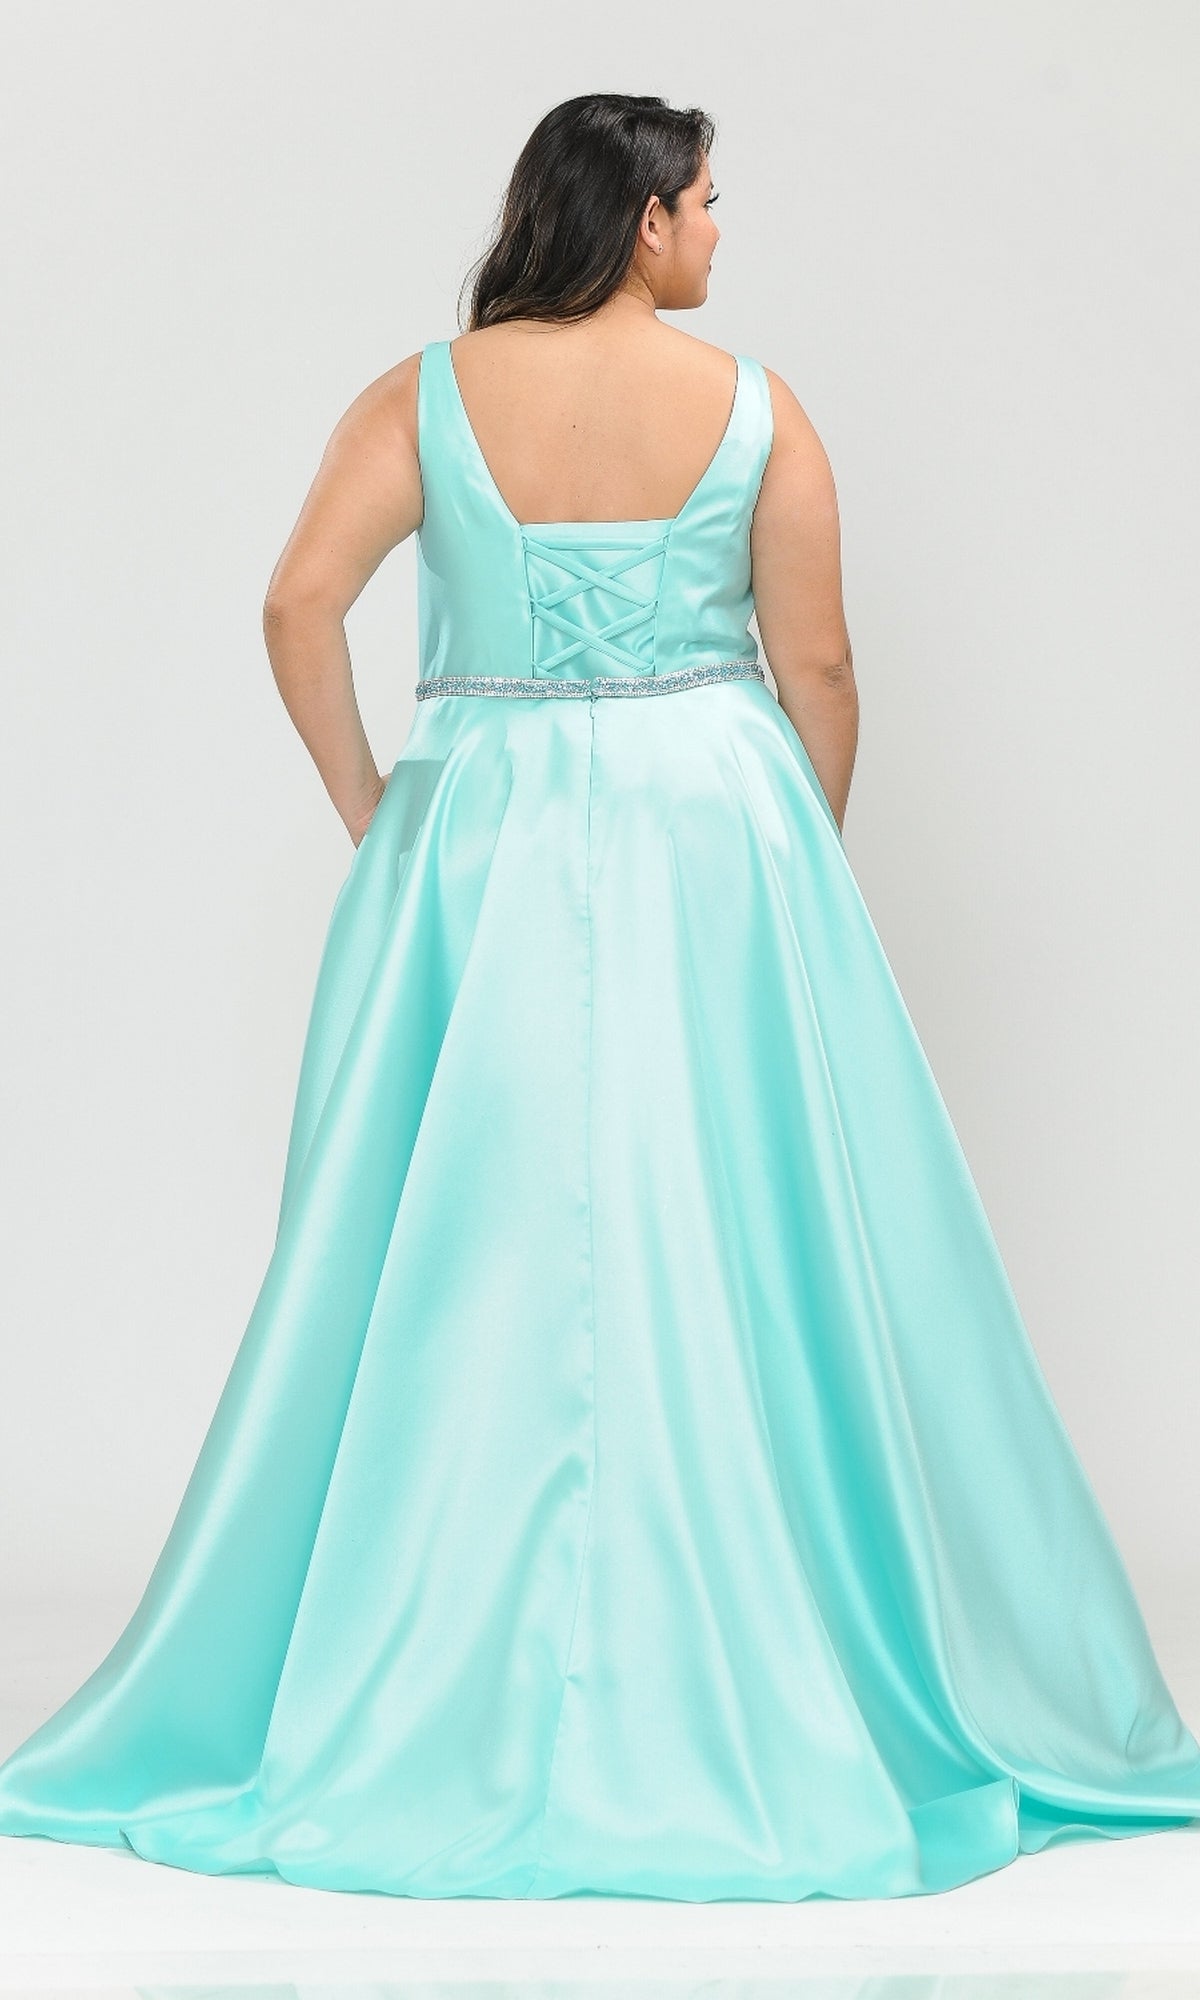 V-Neck Plus-Size Long Prom Dress with Pockets W1108